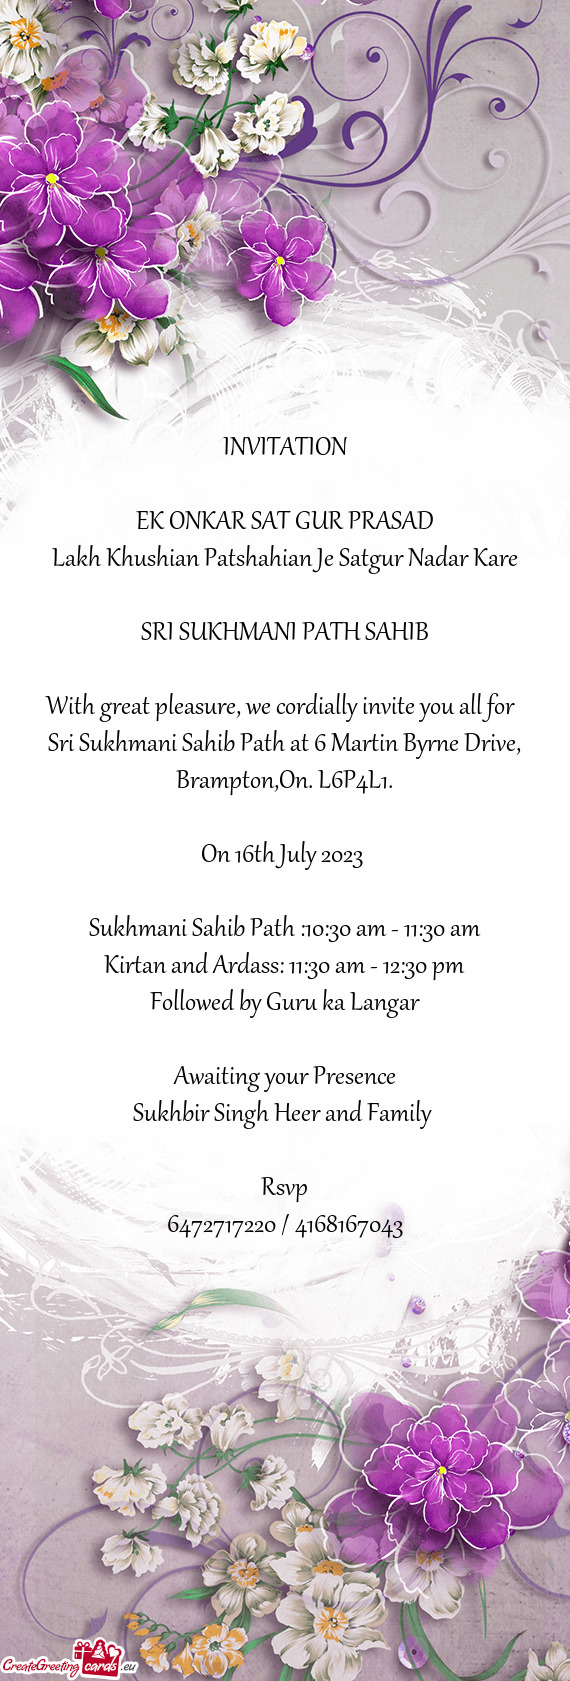 Sri Sukhmani Sahib Path at 6 Martin Byrne Drive, Brampton,On. L6P4L1